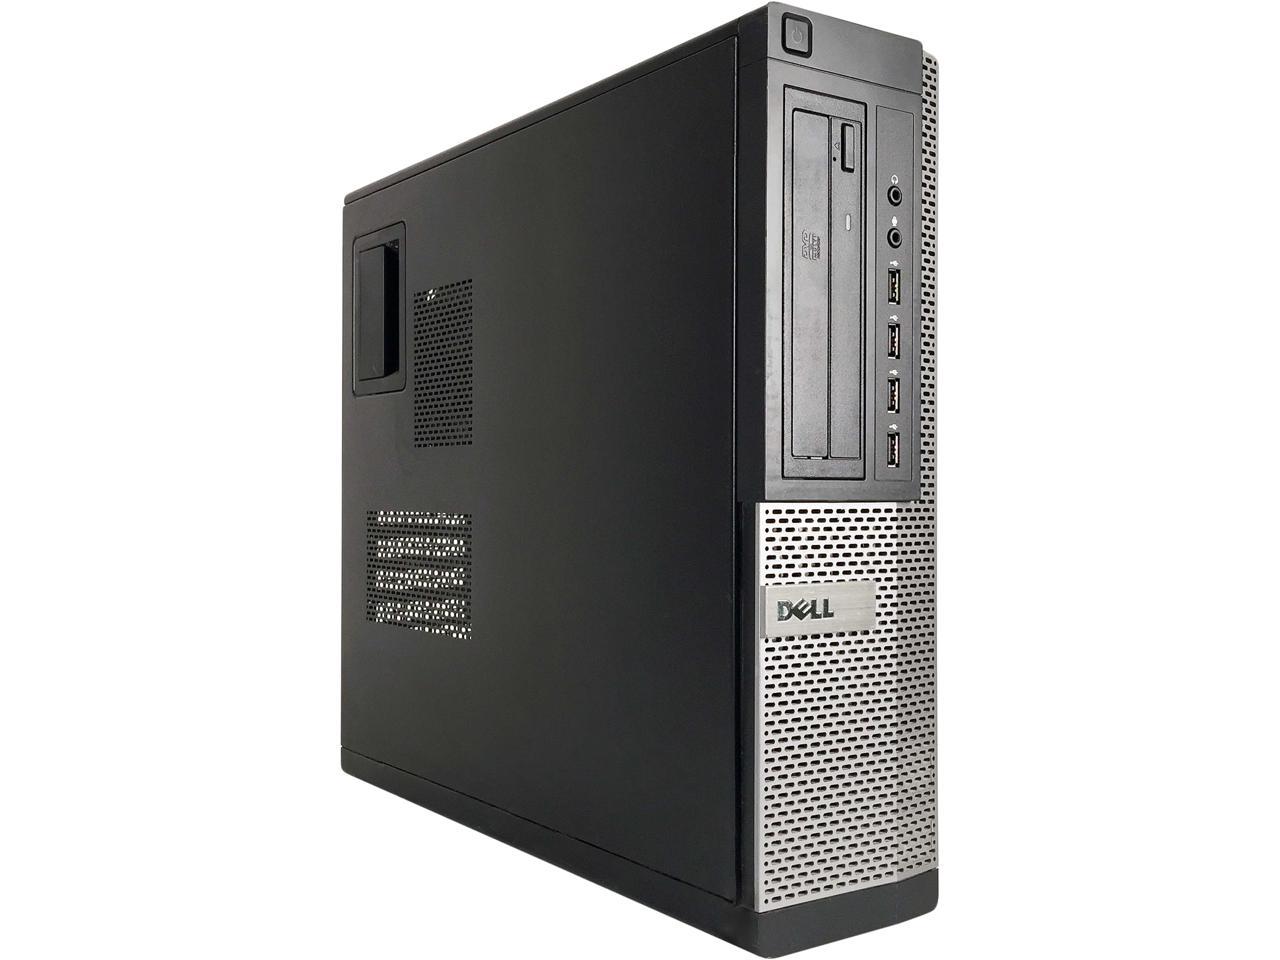 Dell Grade A OptiPlex 790 Desktop Computer, Intel Core i7 2600 (3.40 GHz), 16GB DDR3, 512G SSD, DVD, USB WIFI Adapter, USB Bluetooth Adapter, Windows 10 Home 64-bit Multi-language